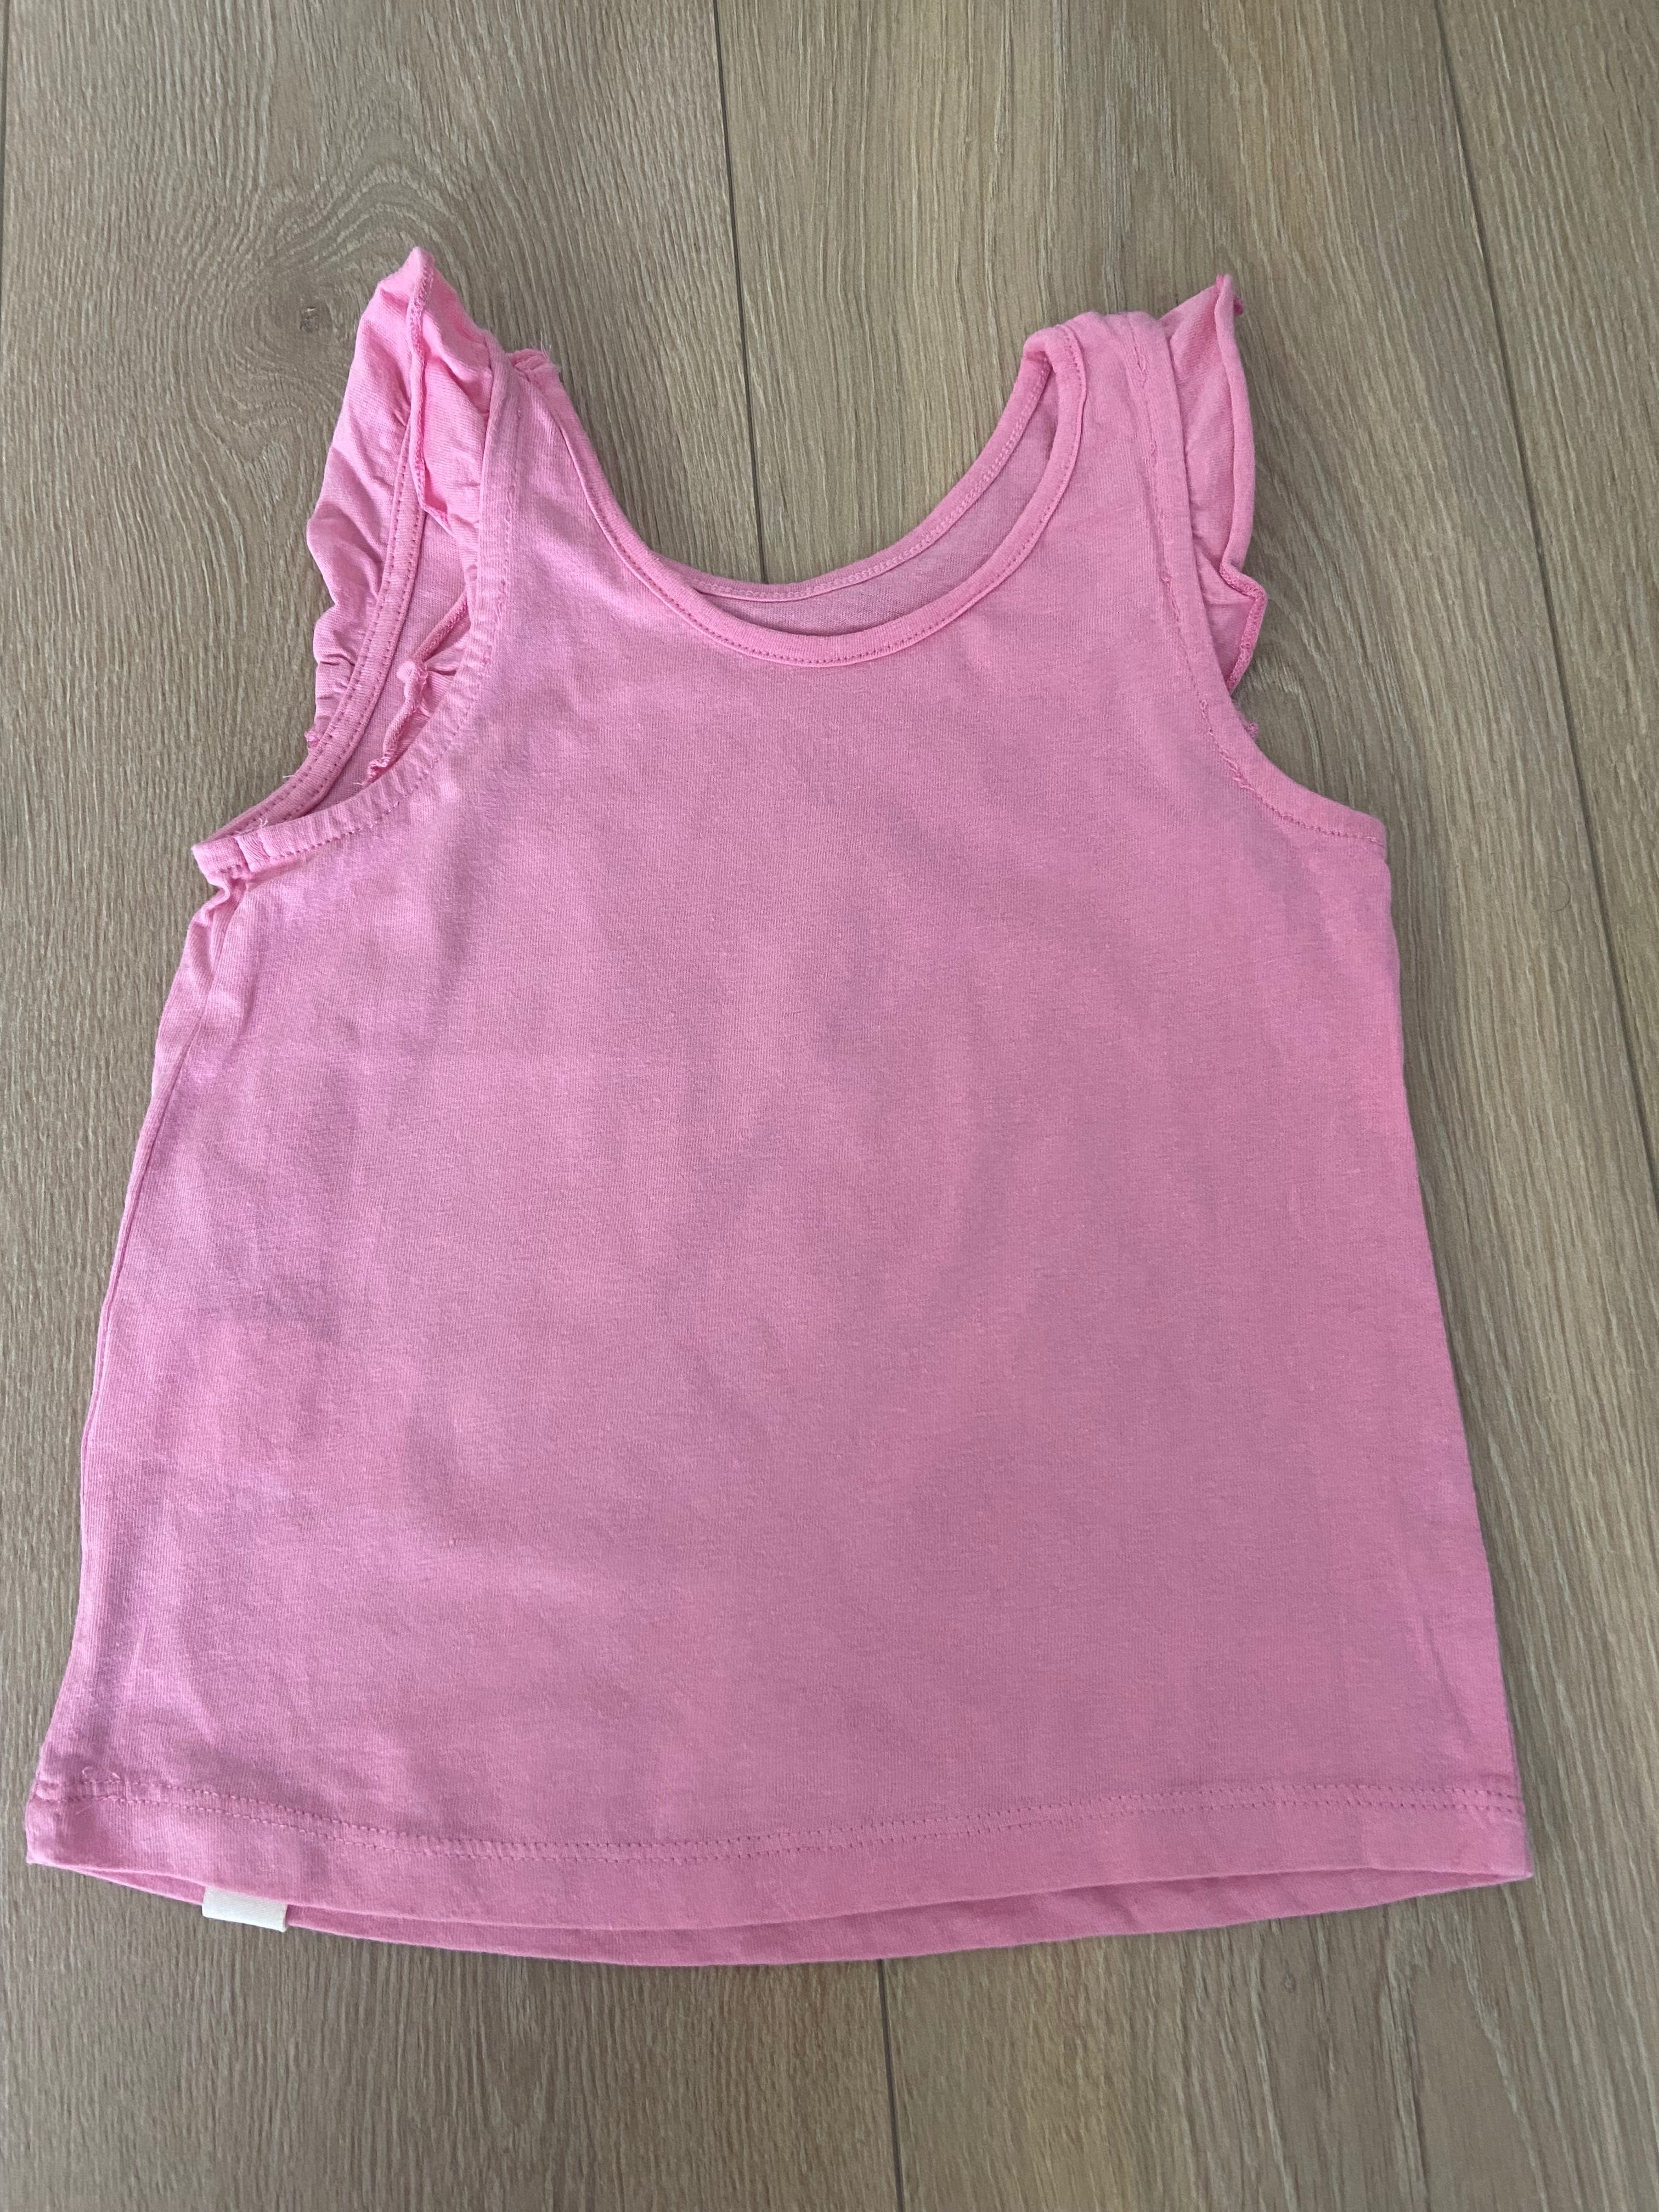 Bluzka koszulka cool club smyk roz 98 t-shirt